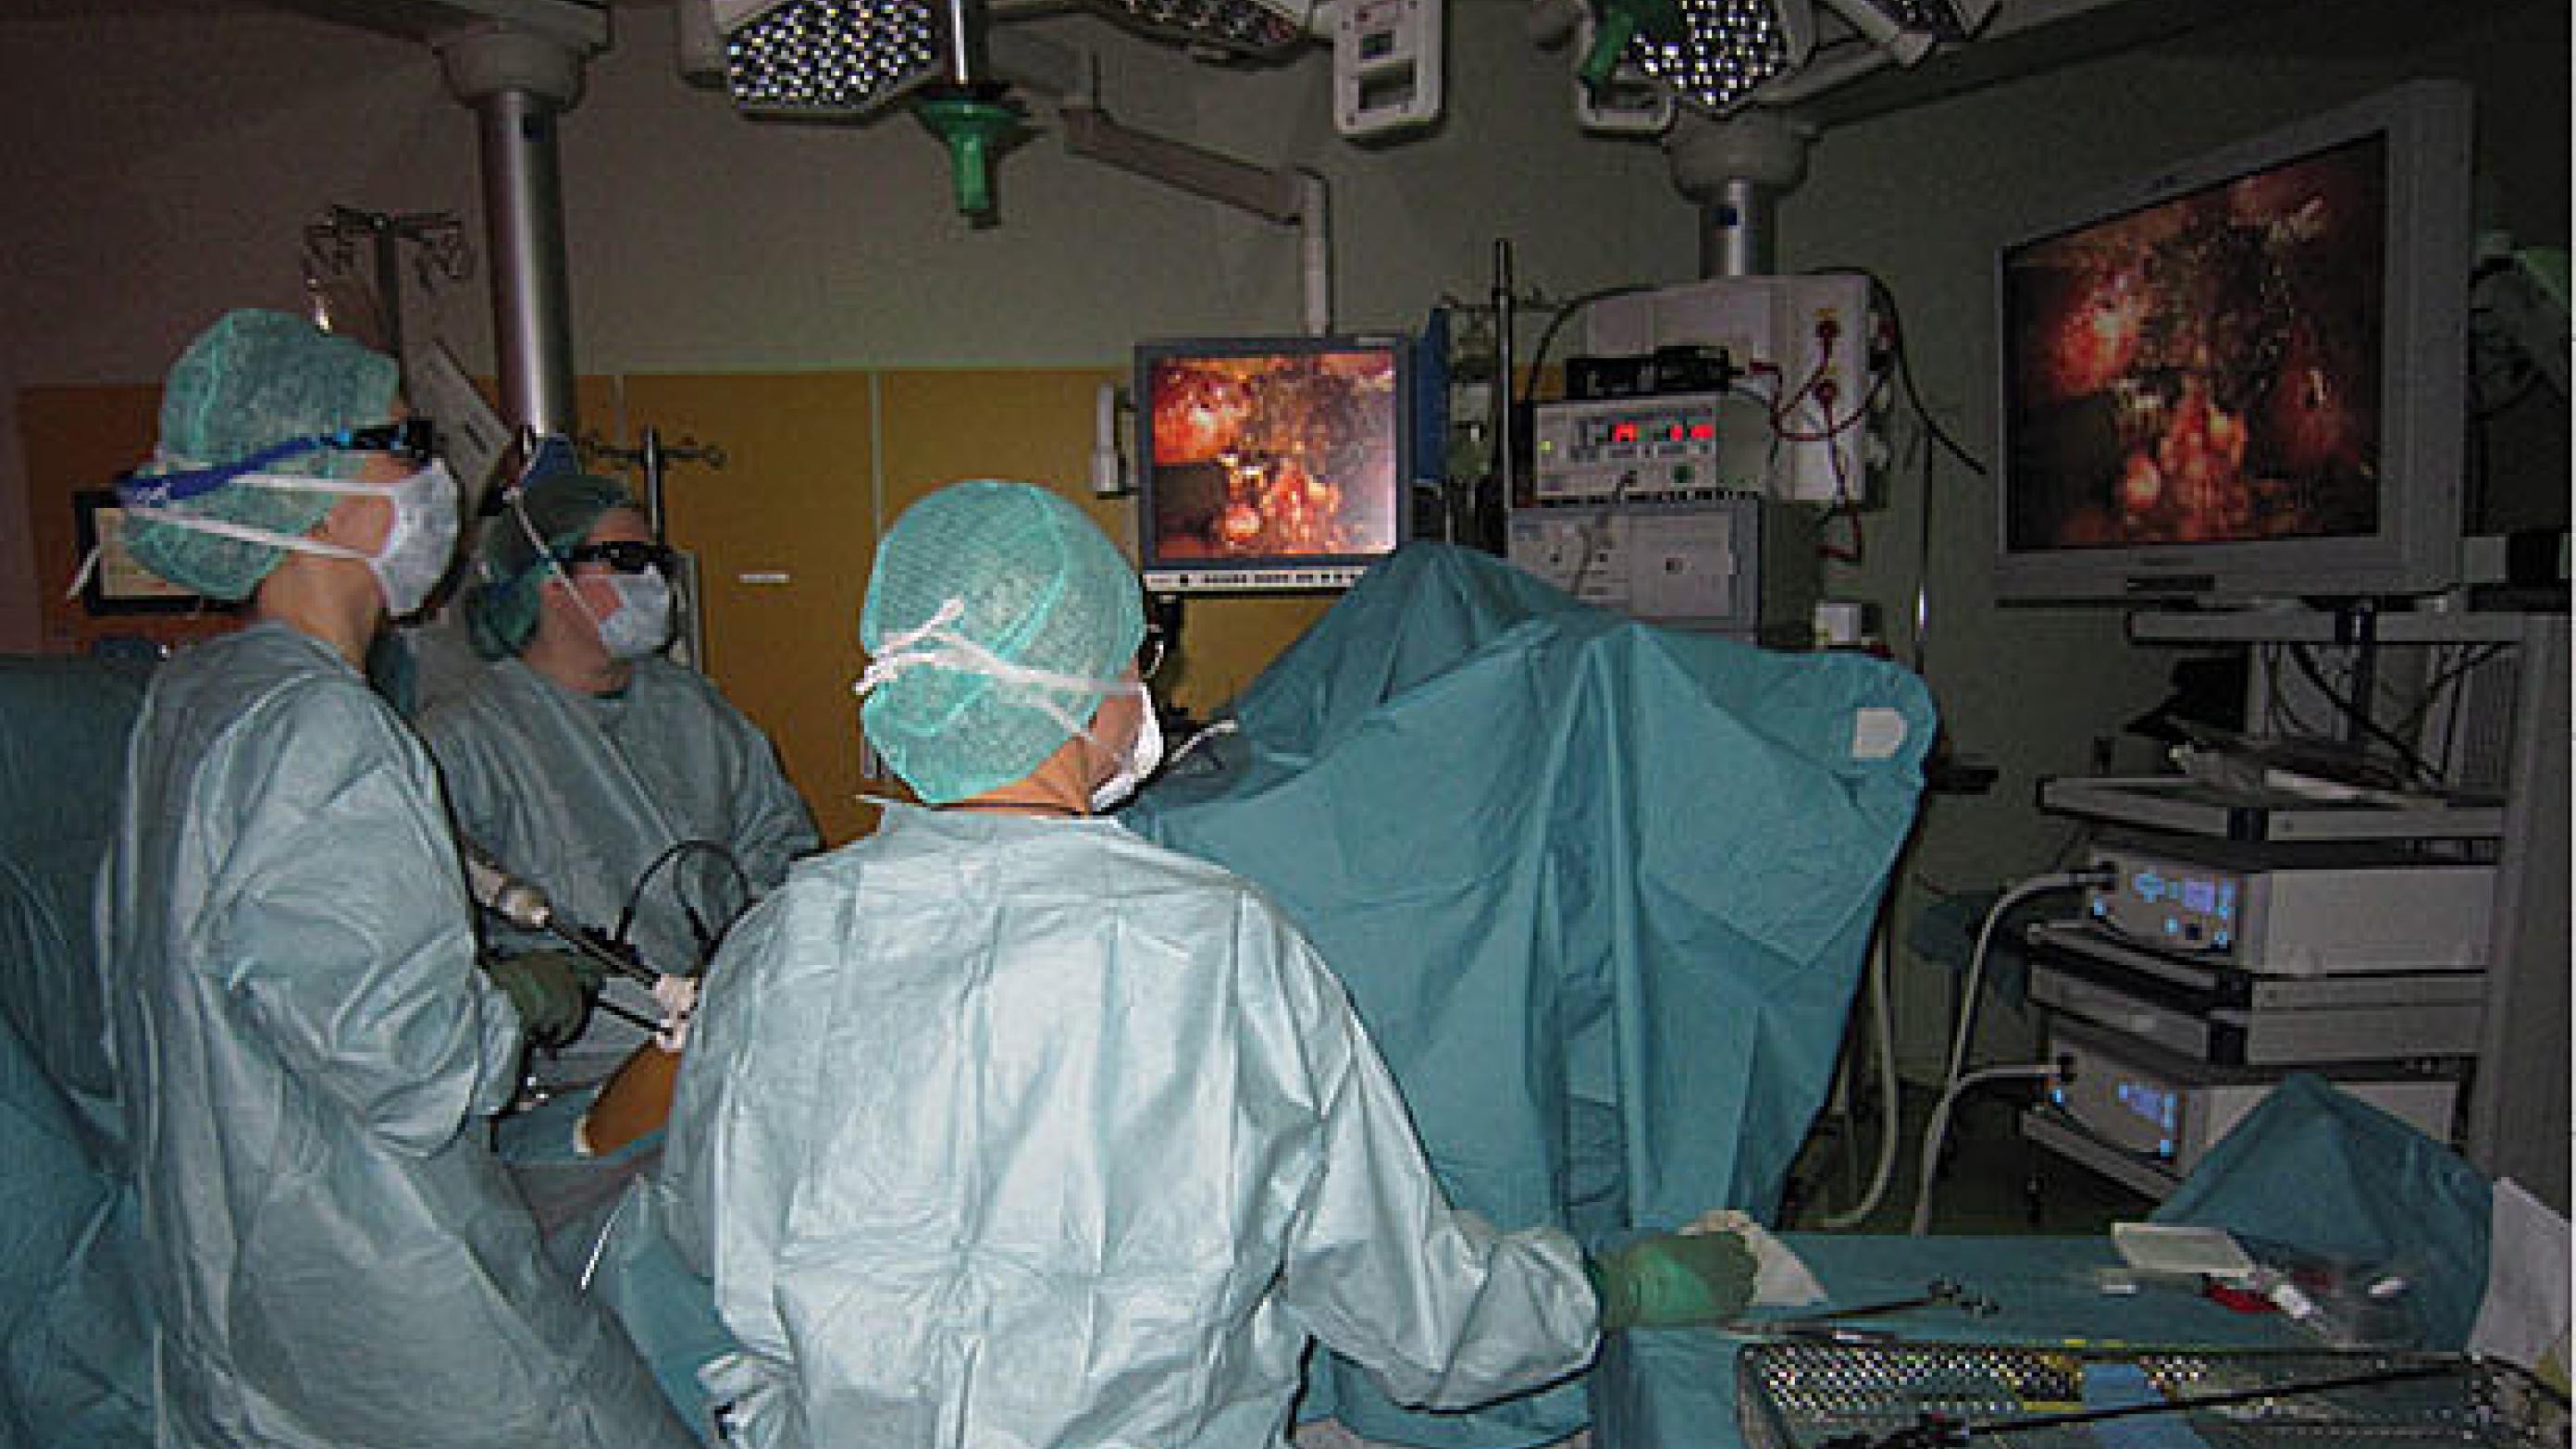 Tredimensional laparoskopi i den kliniske situation.